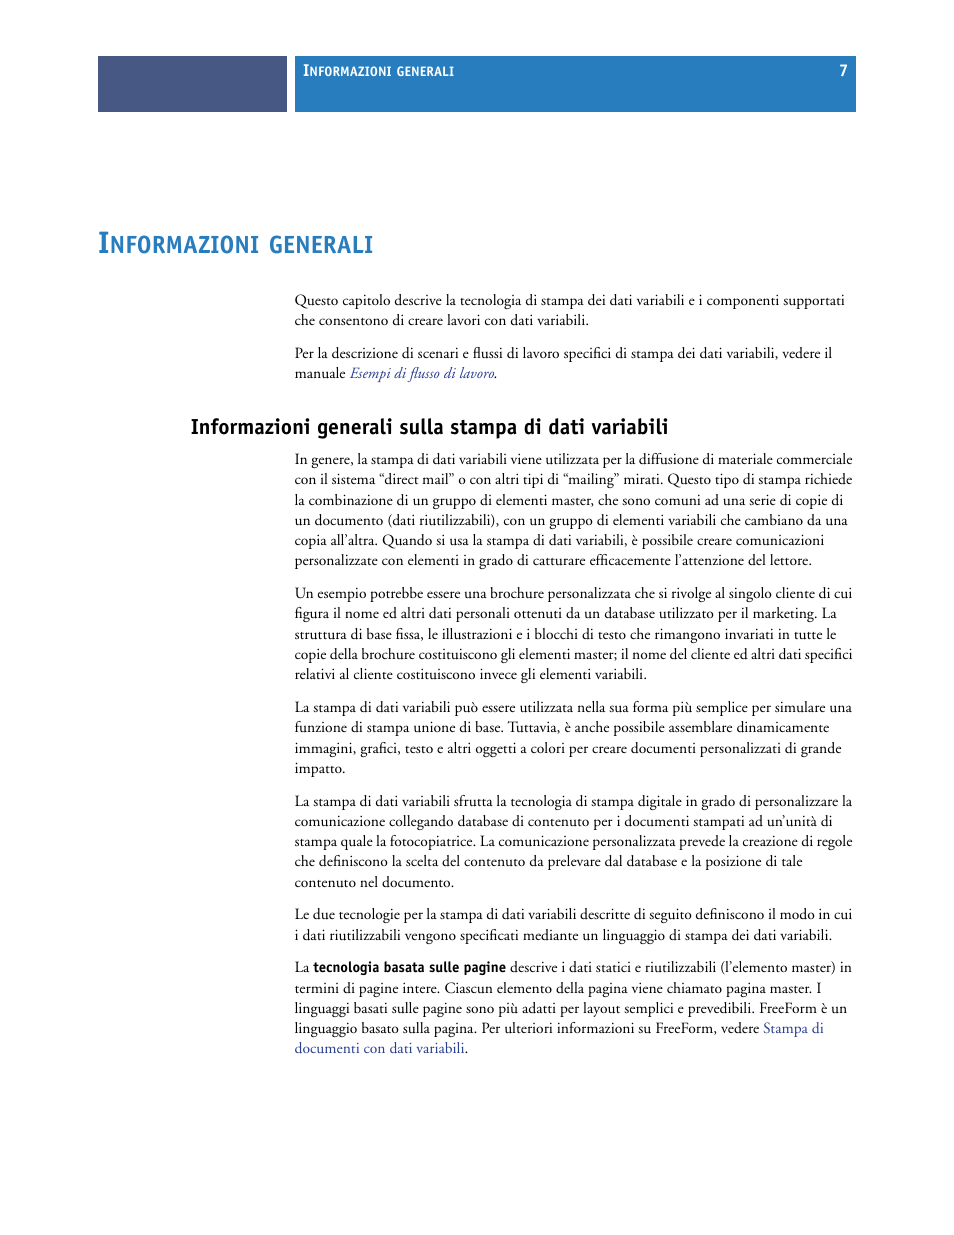 Informazioni generali, Nformazioni, Generali | Konica Minolta bizhub PRO C6500P Manuale d'uso | Pagina 7 / 28